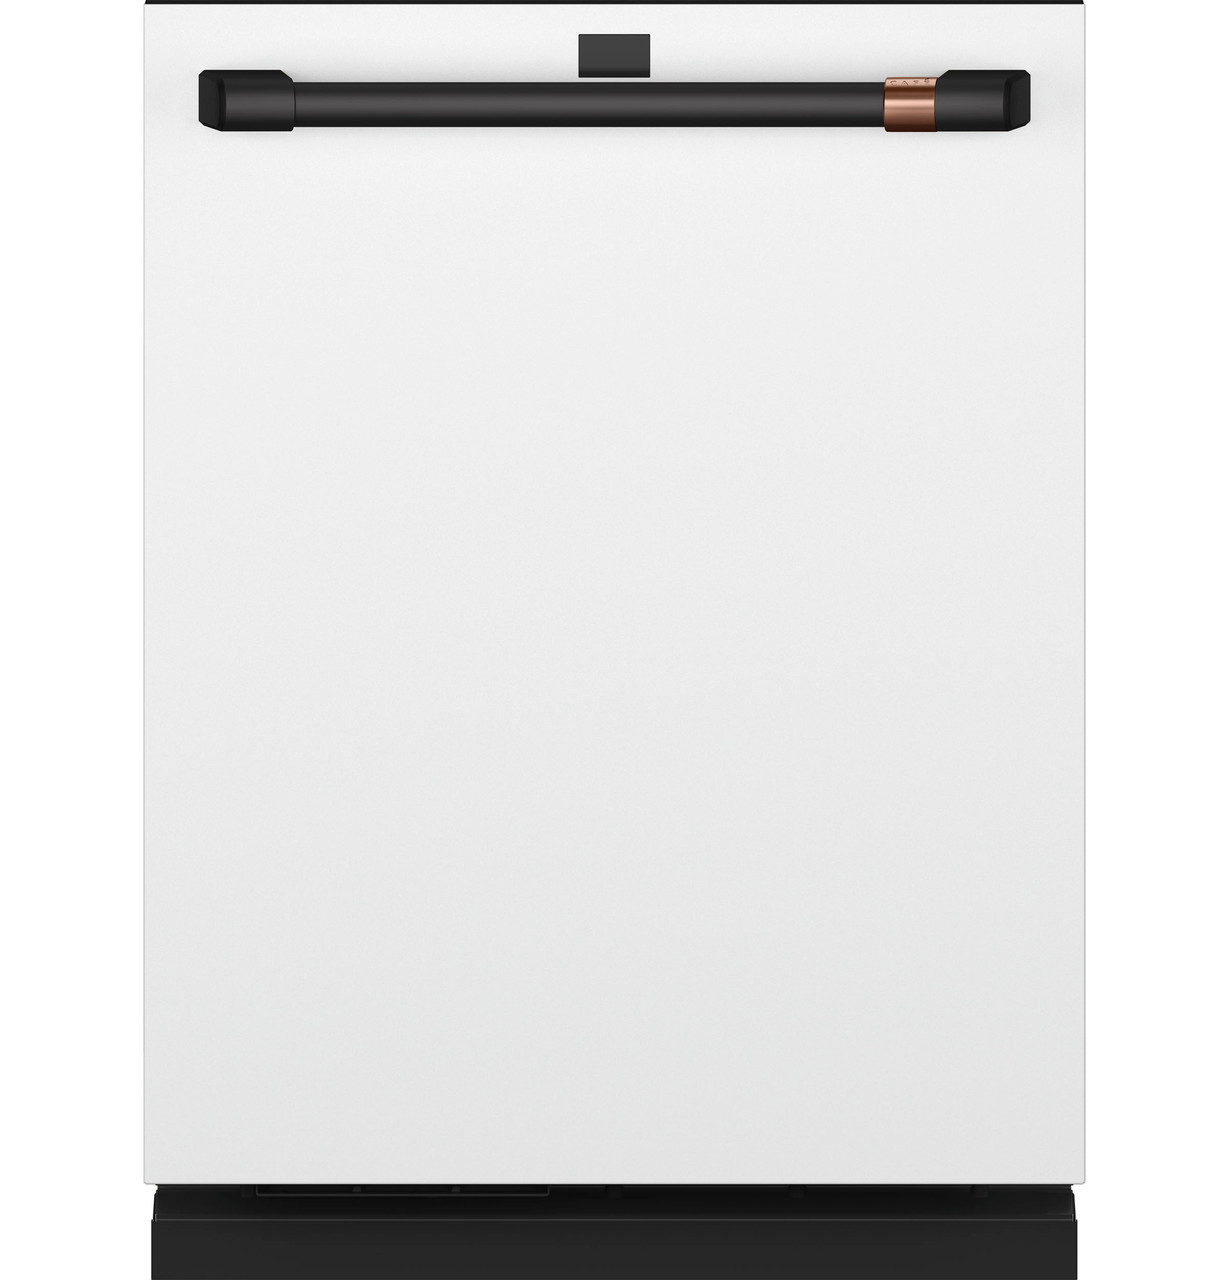 Frigidaire Dishwasher - Like New - appliances - by owner - sale - craigslist